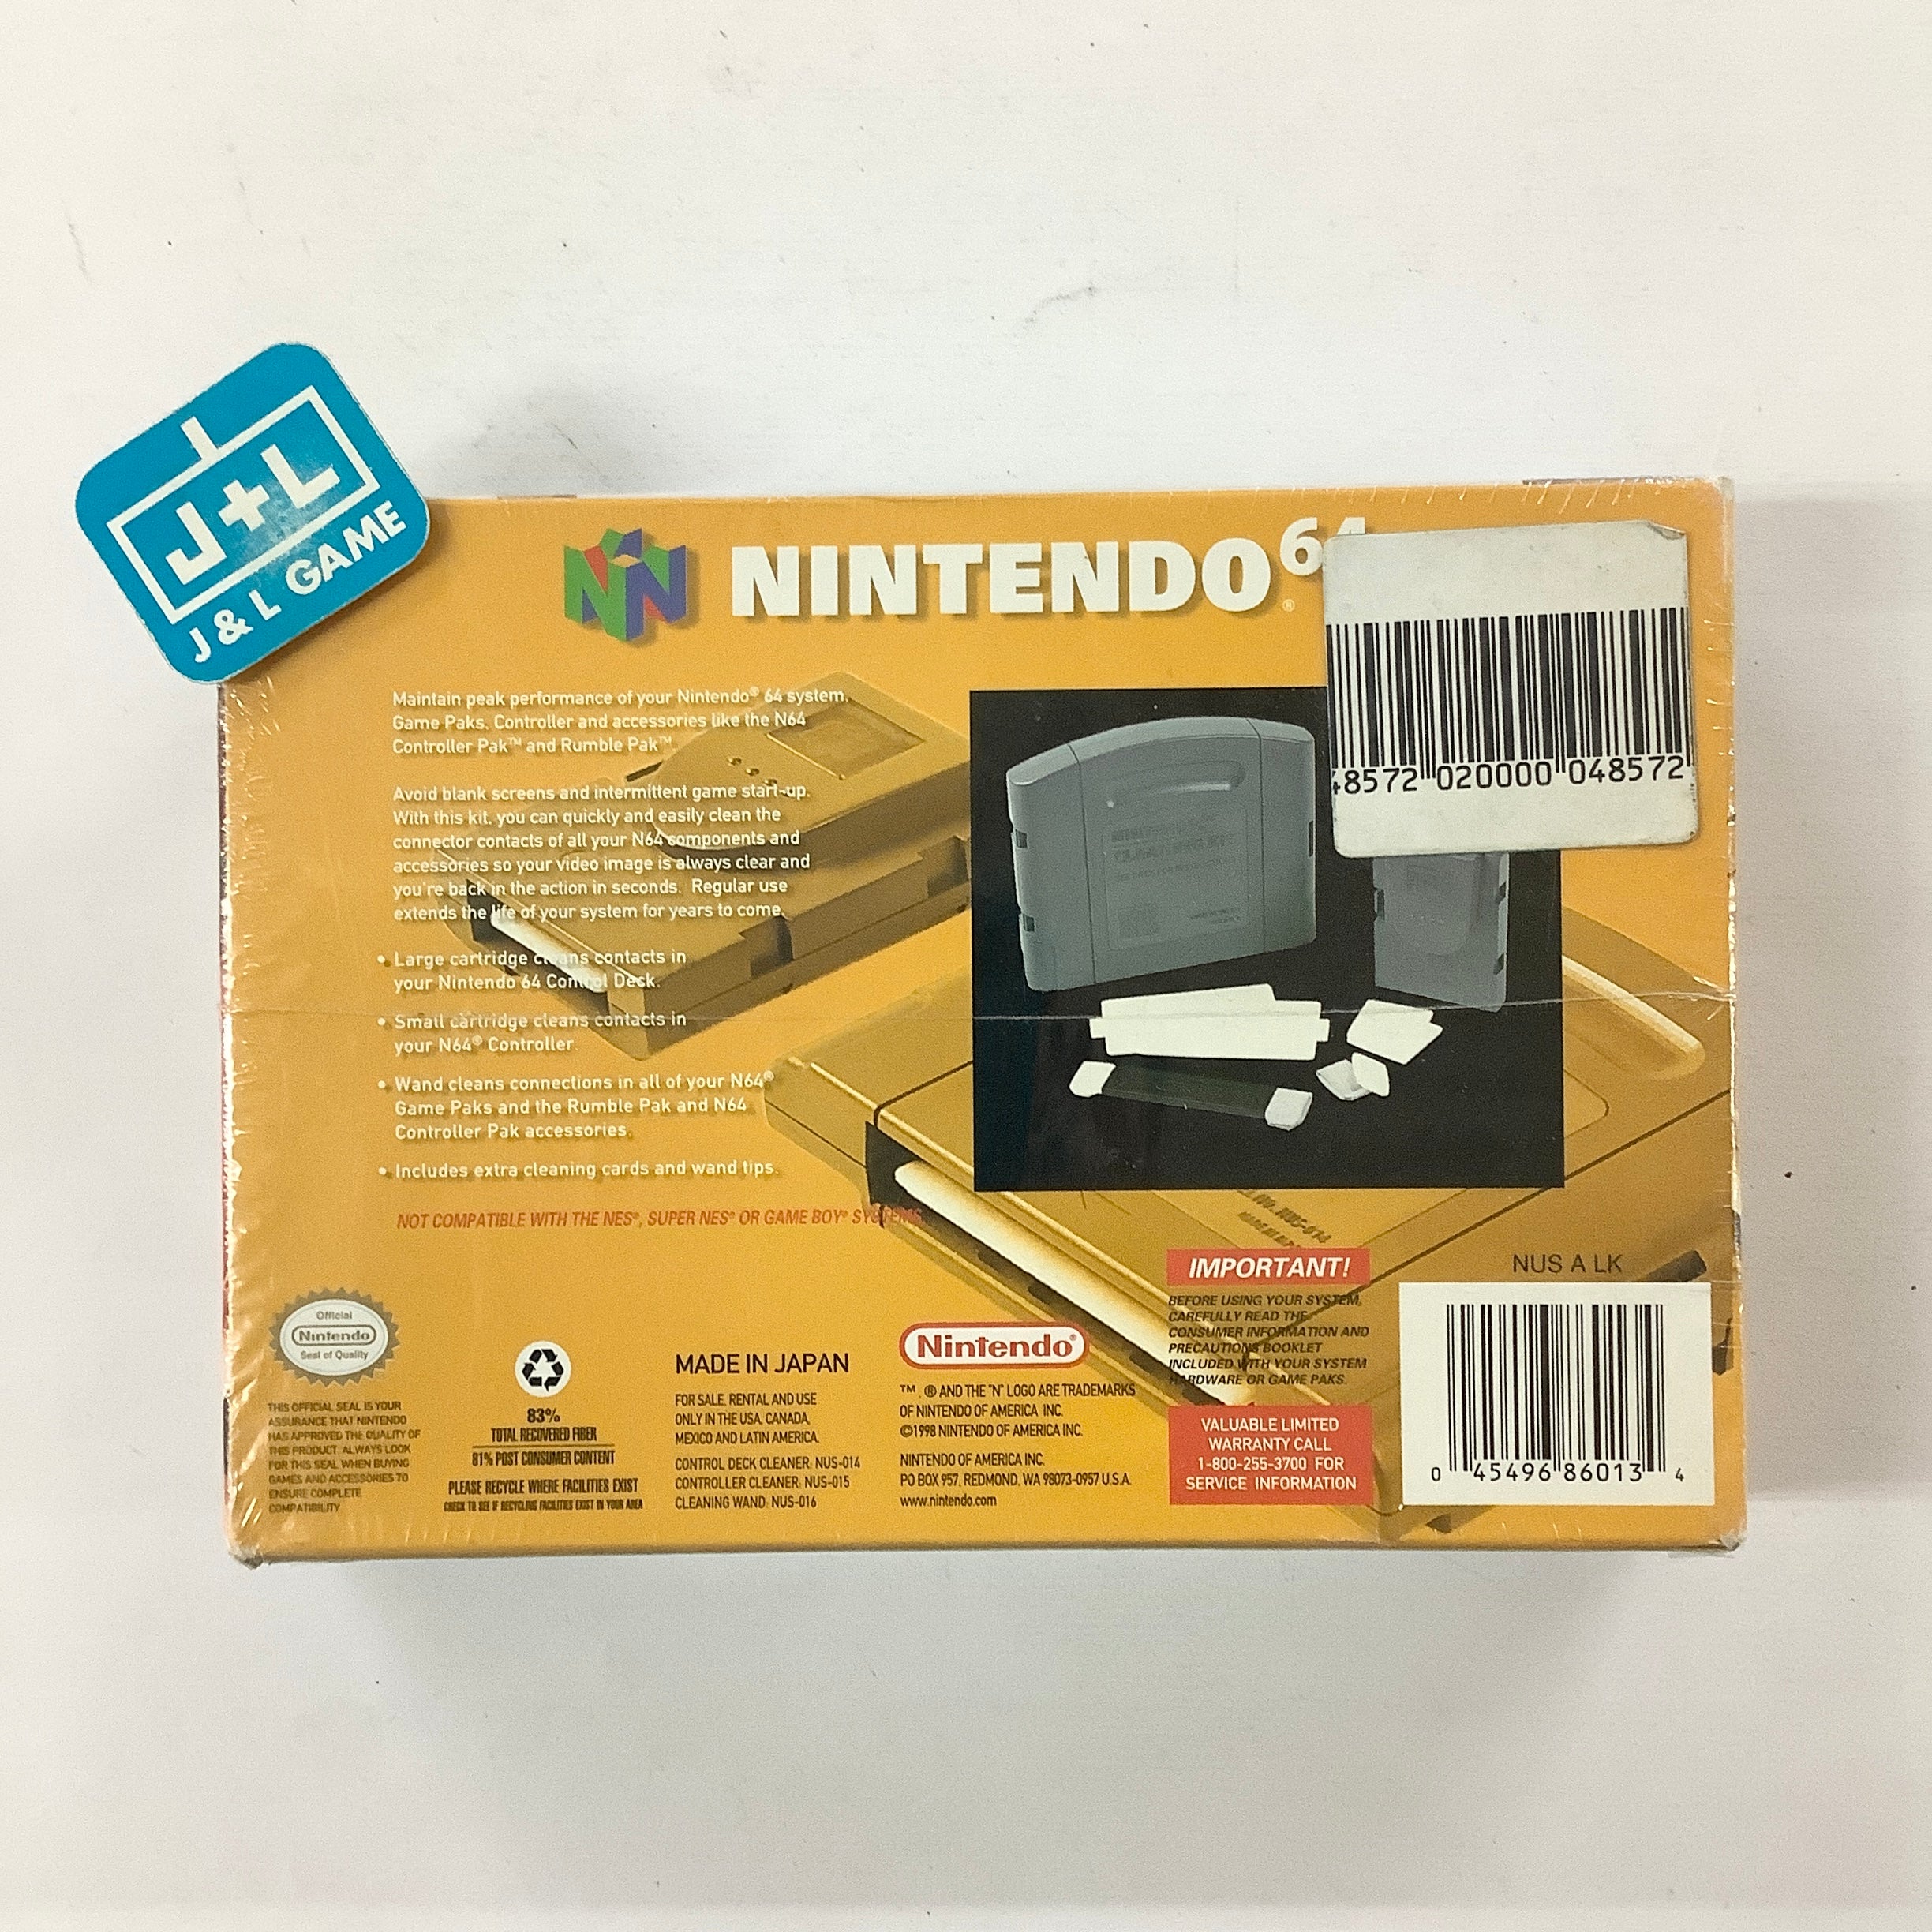 Nintendo 64 Cleaning Kit - (N64) Nintendo 64 Video Games Nintendo   